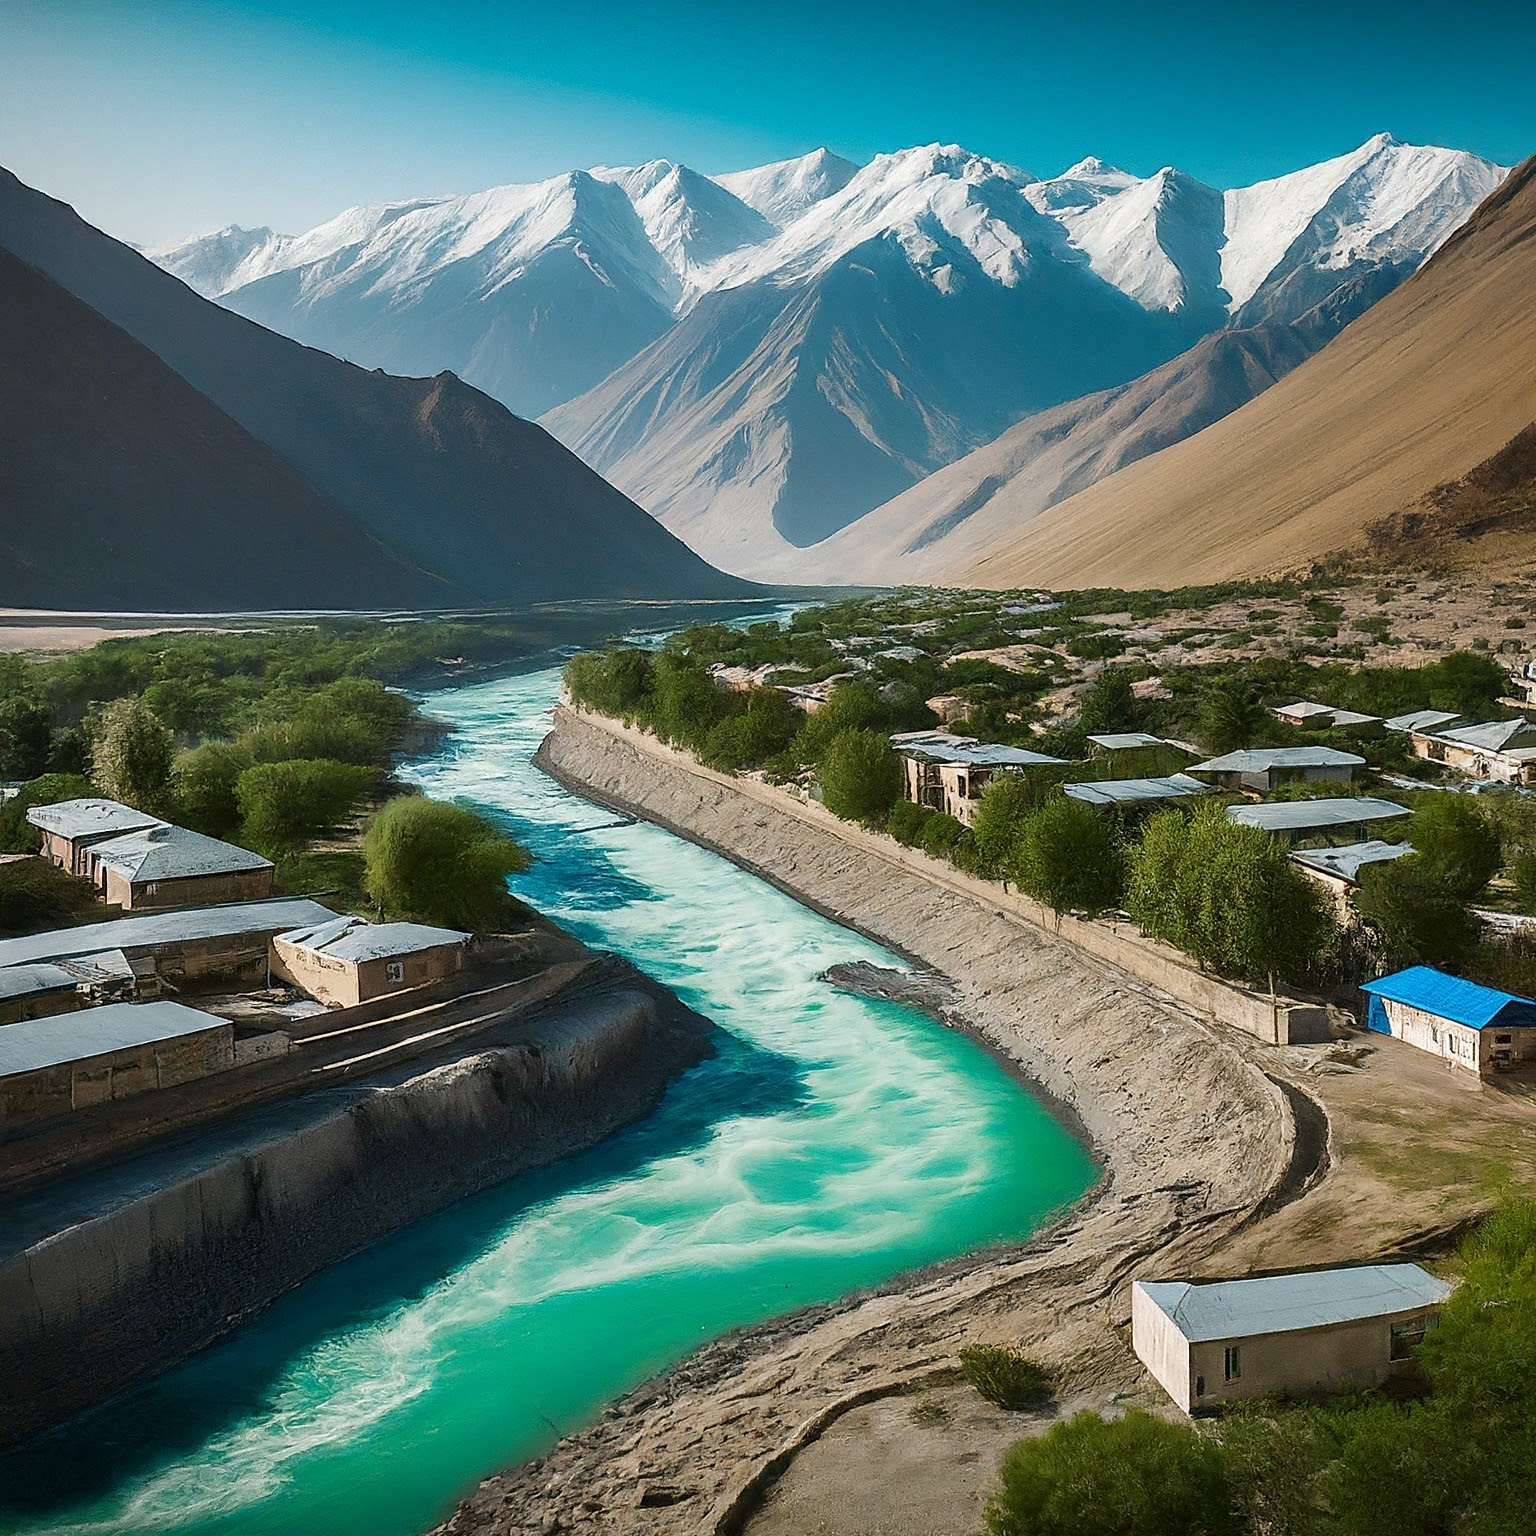 Panj River winding through Khorog, Tajikistan, with Pamir Mountains in the background.